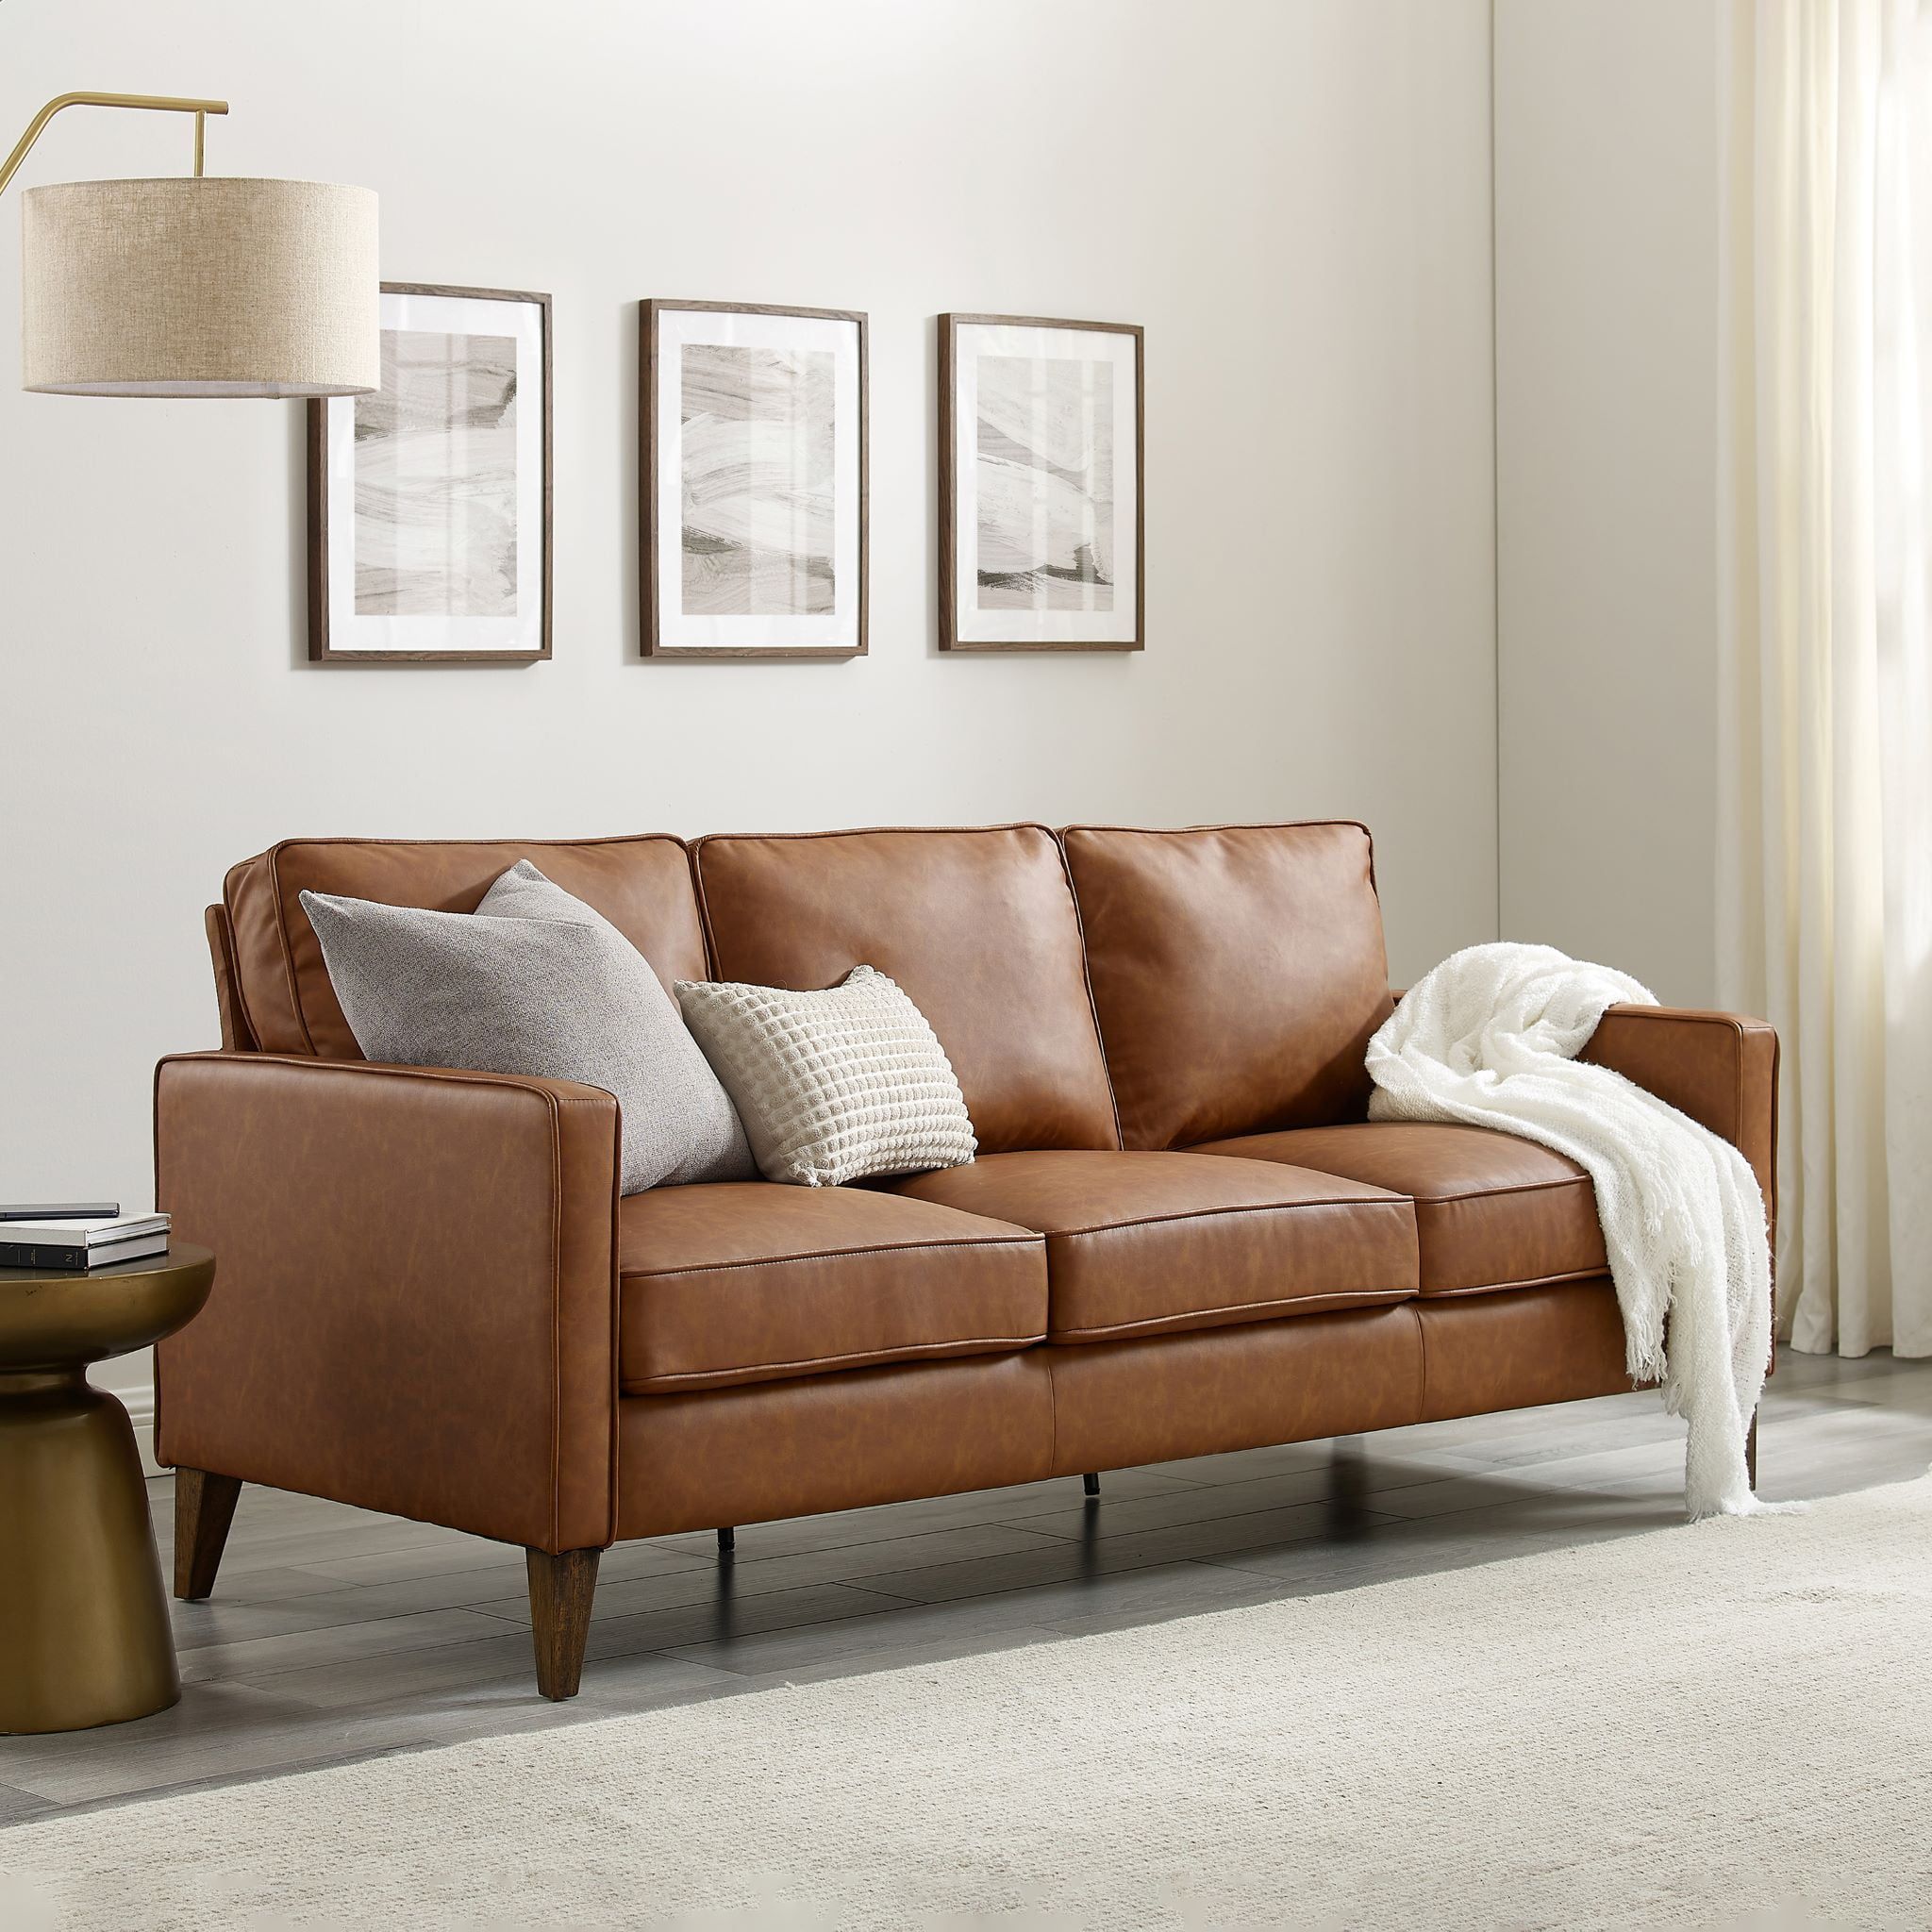 Hillsdale Jianna Faux Leather Sofa, Grey – Walmart With Regard To Faux Leather Sofas (Photo 5 of 15)